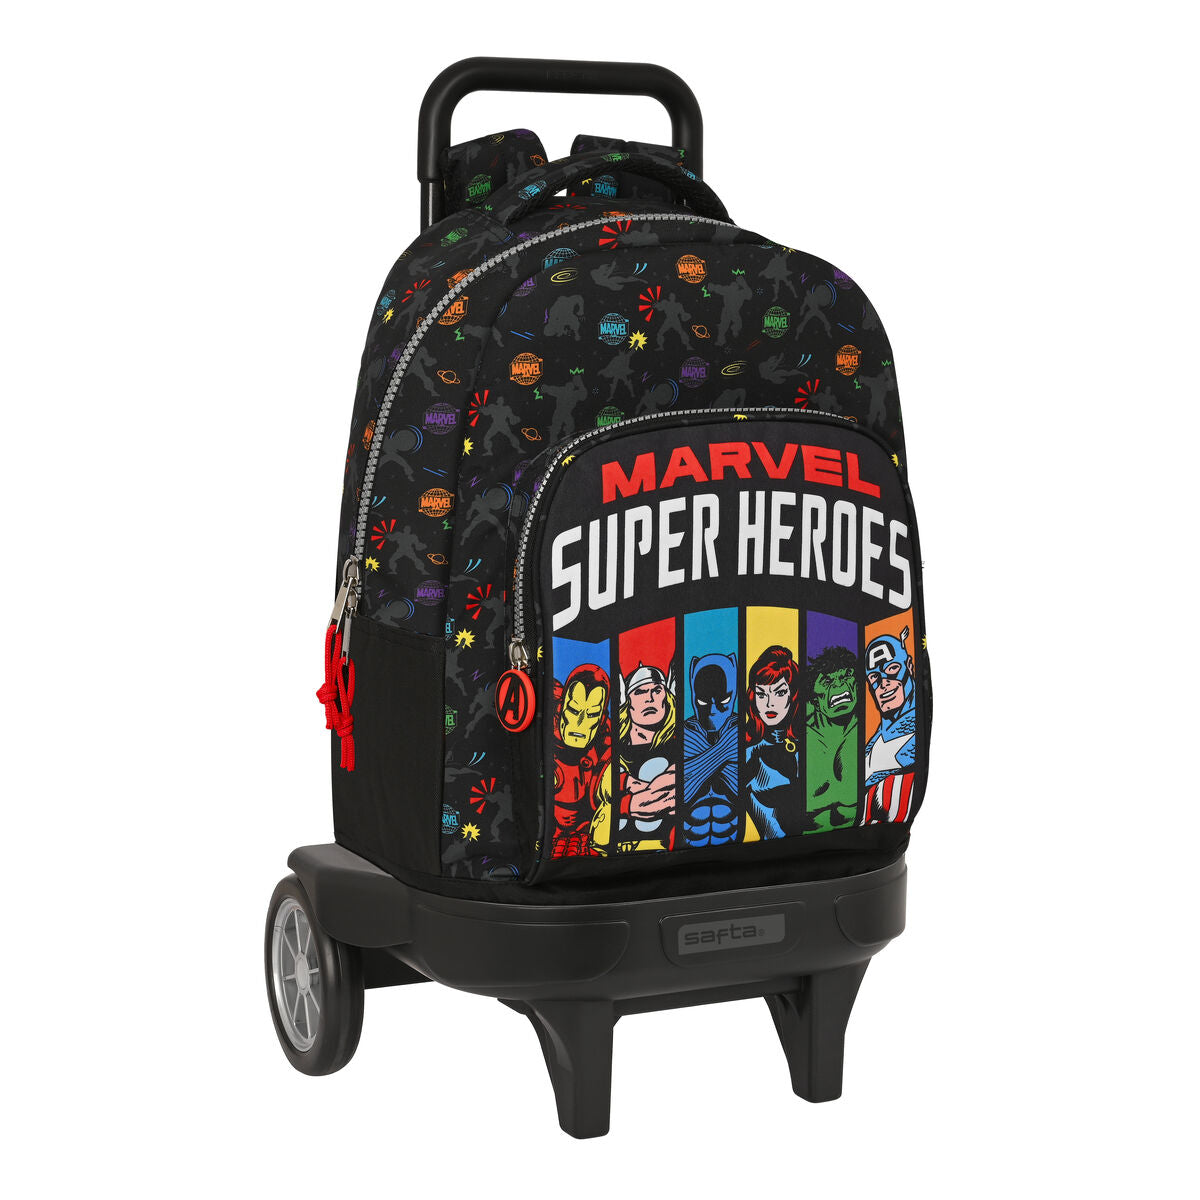 School Rucksack with Wheels The Avengers Super heroes Black (33 x 45 x 22 cm)